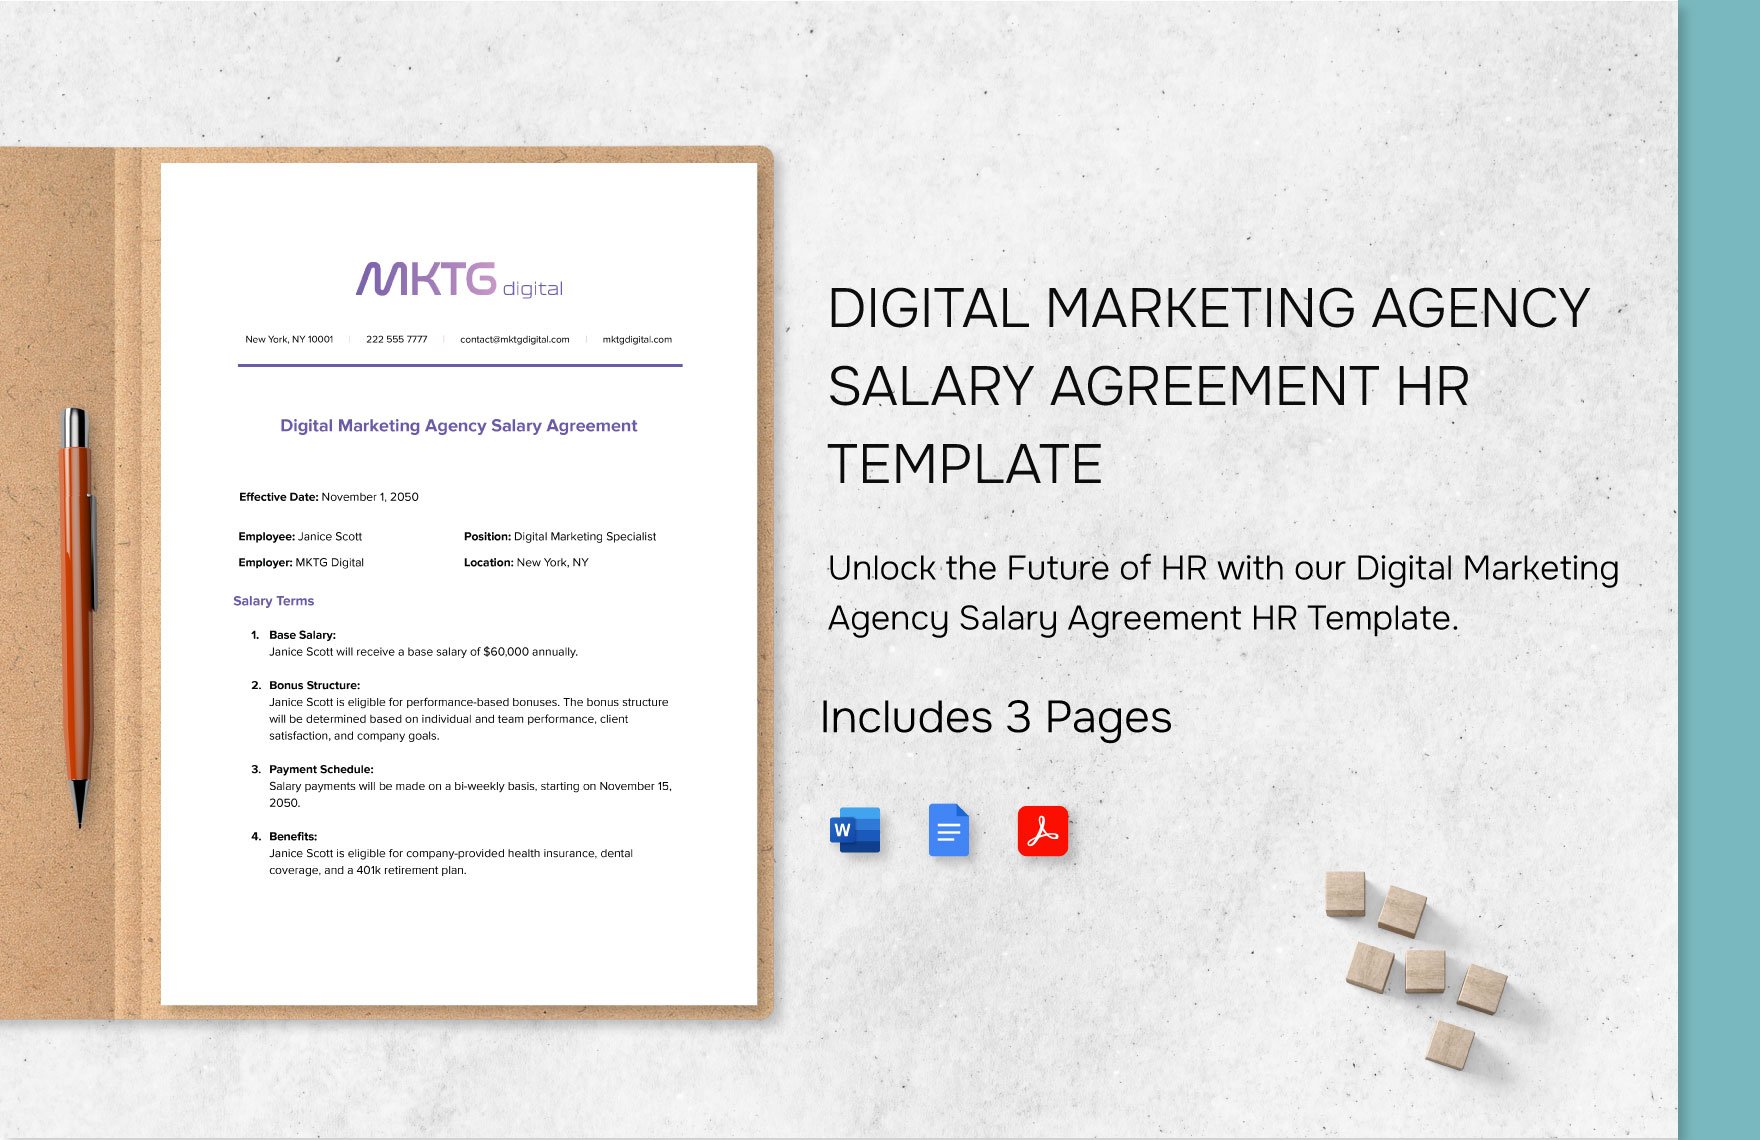 Digital Marketing Agency Salary Agreement HR Template